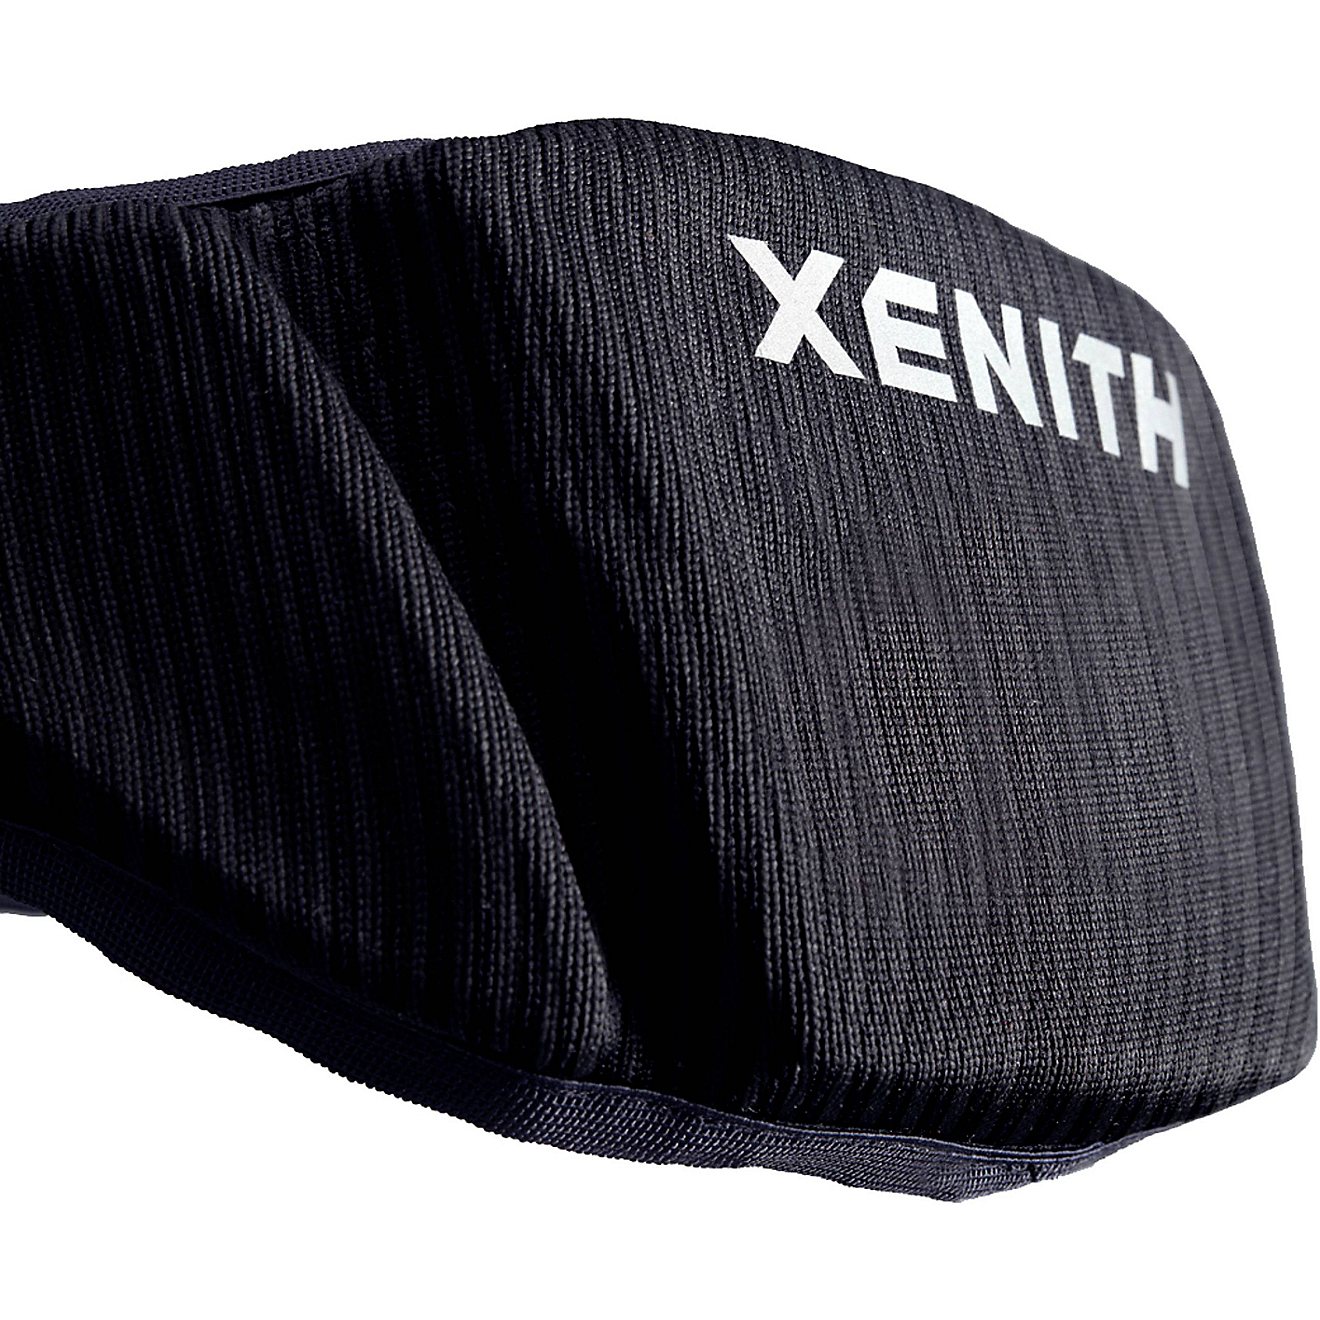 Xenith LOOP Non-Tackle Football Headgear | Academy